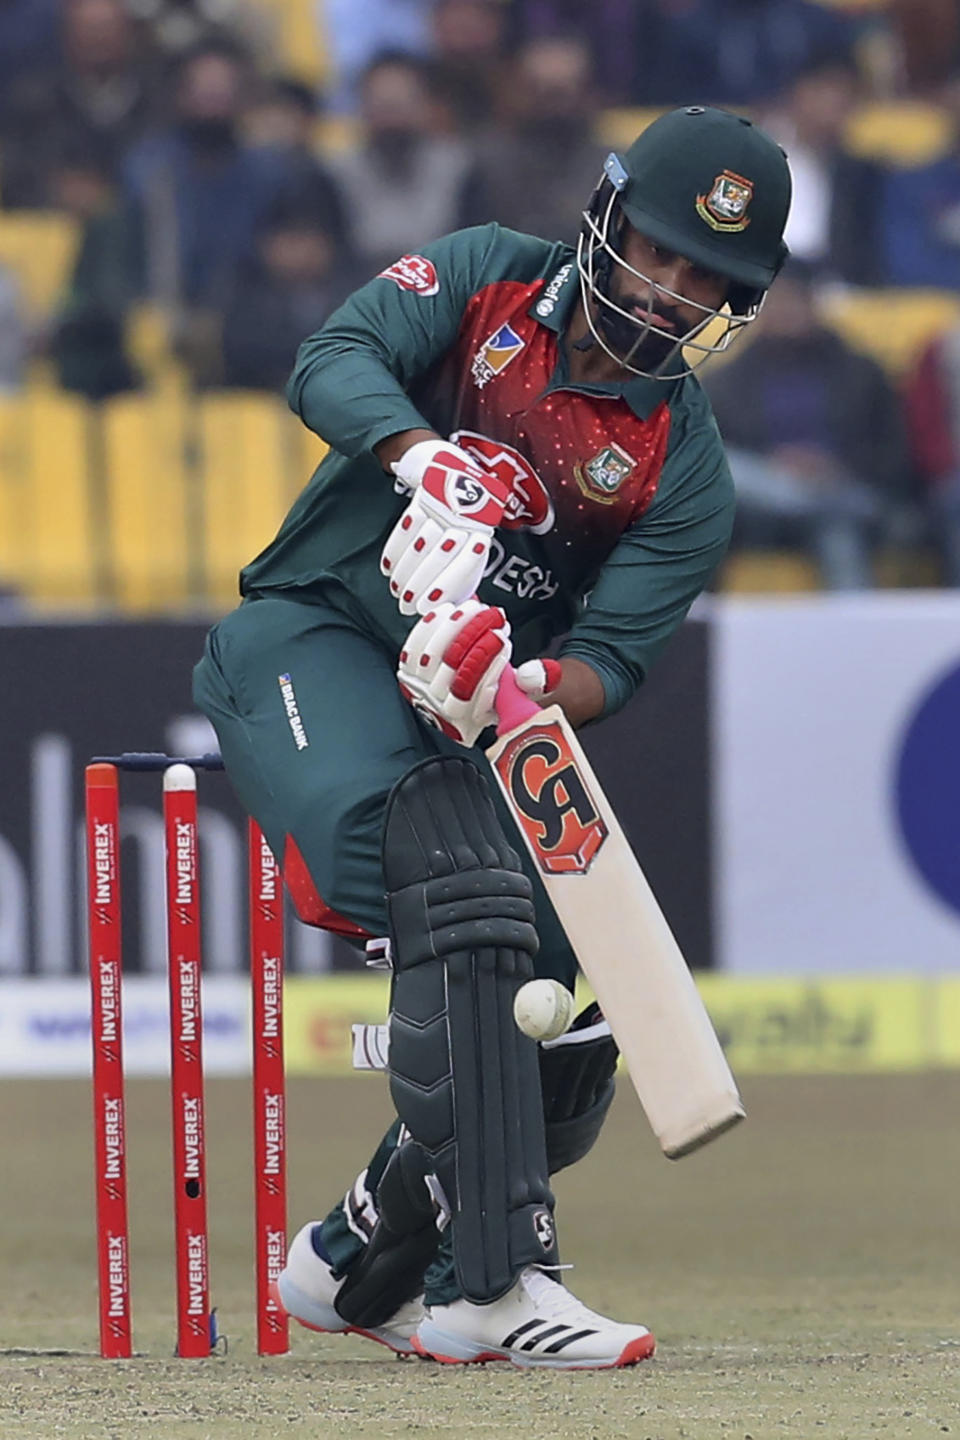 Bangladesh batsman Tamim Iqbal plays a shot during the second T20 cricket match against Pakistan at Gaddafi stadium, in Lahore, Pakistan, Saturday, Jan. 25, 2020. (AP Photo/K.M. Chaudary)